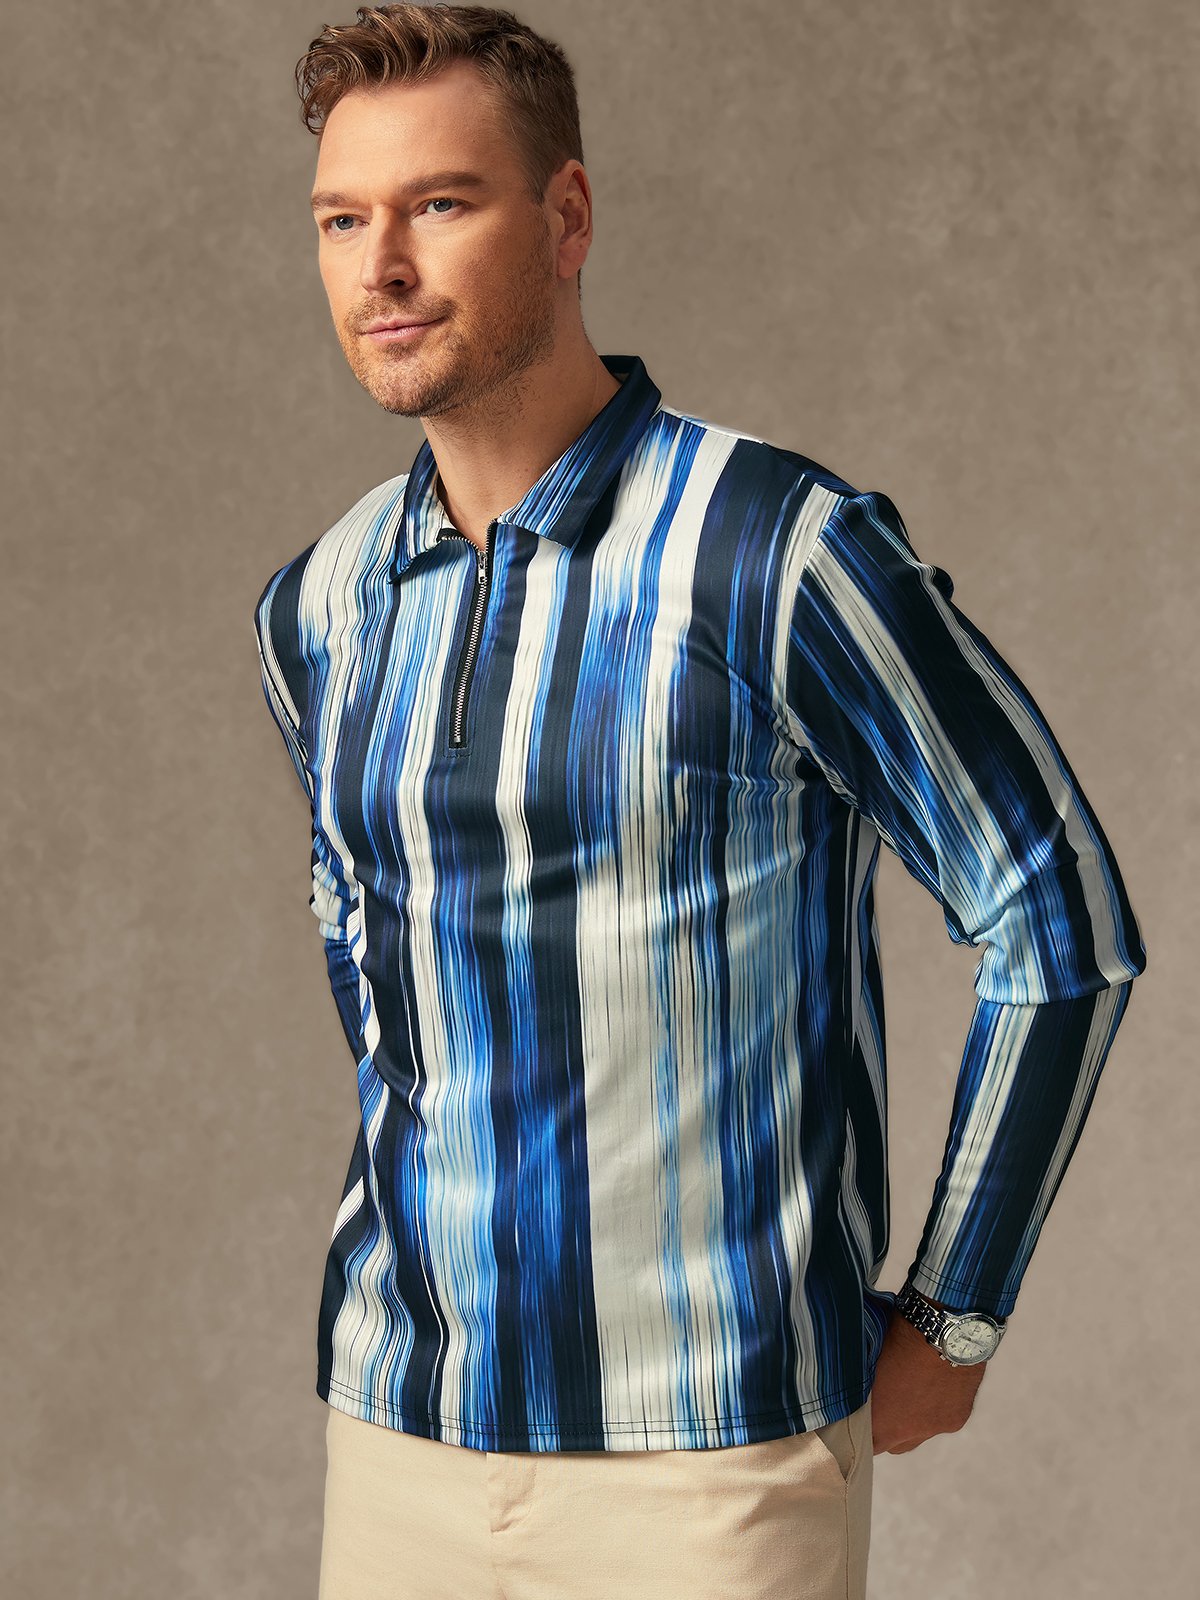 Abstract Gradient Geometric Zipper Long Sleeve Casual Polo Shirt